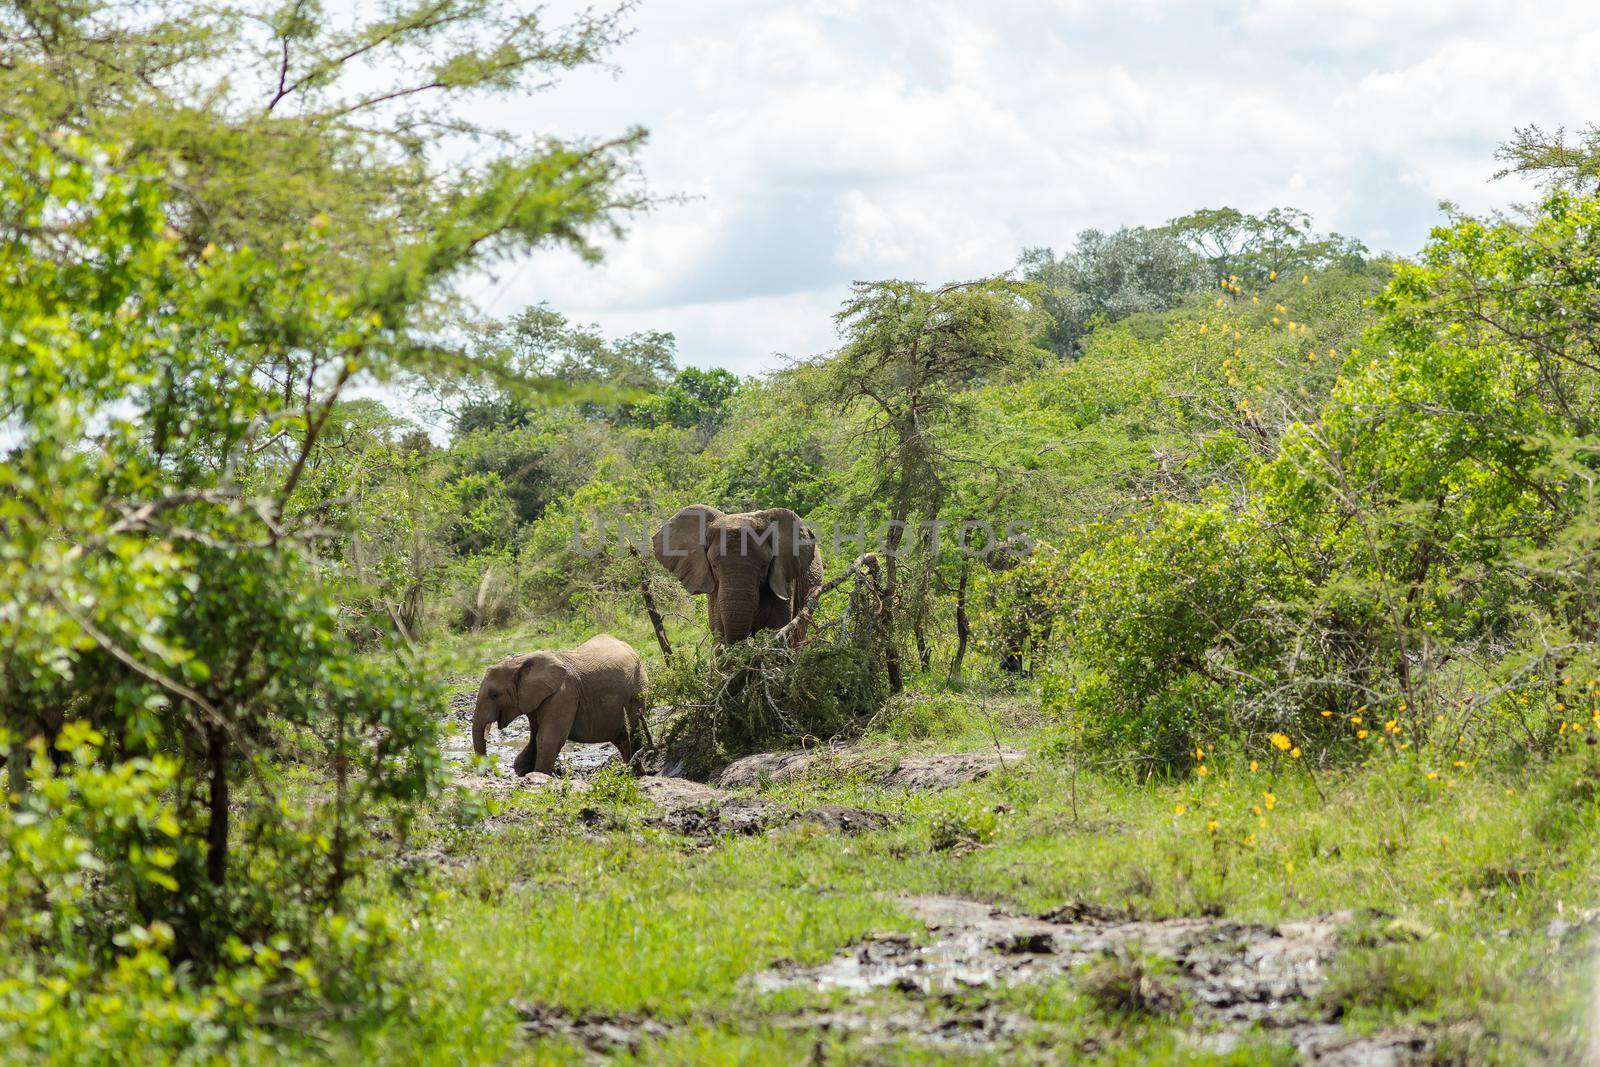 Family of elephants in elephant park in Africa by Yaroslav_astakhov